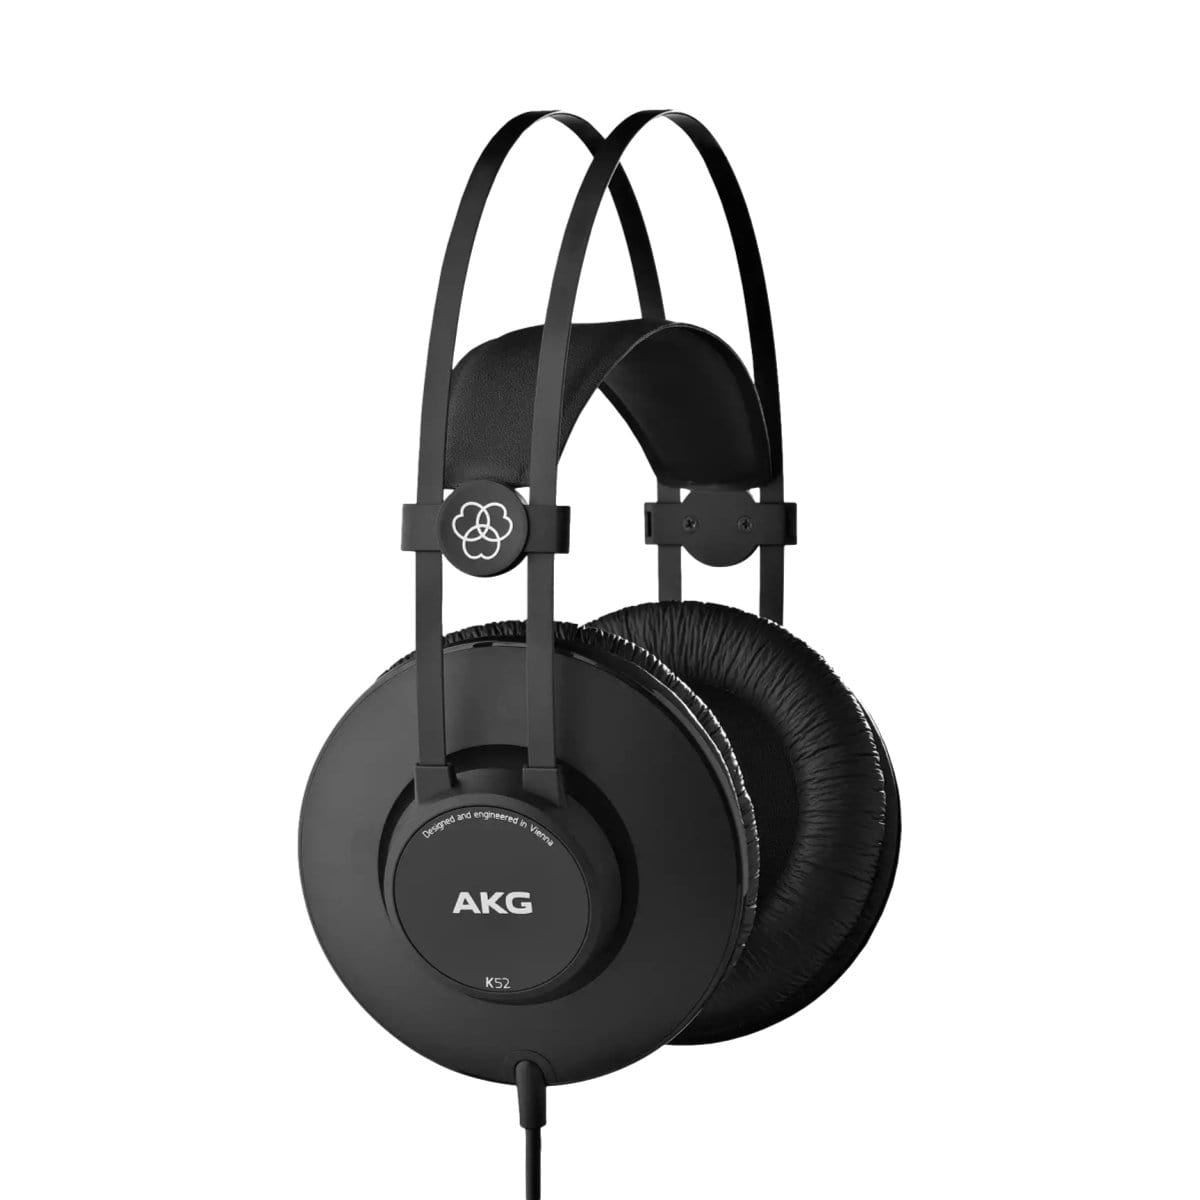 AKG Recording AKG K52 Studio Headphones Closed Back - Byron Music